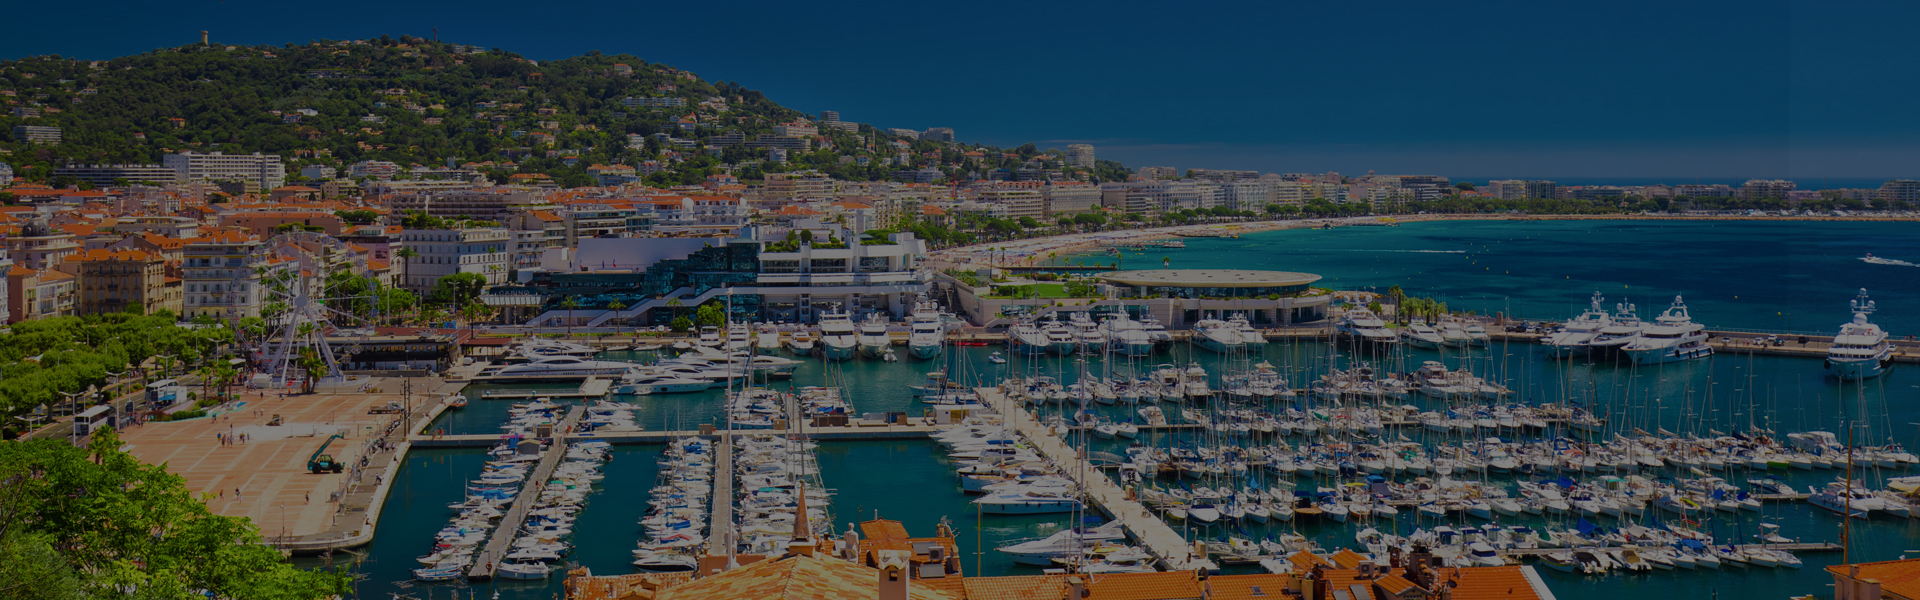 Hotel Eden de Cannes